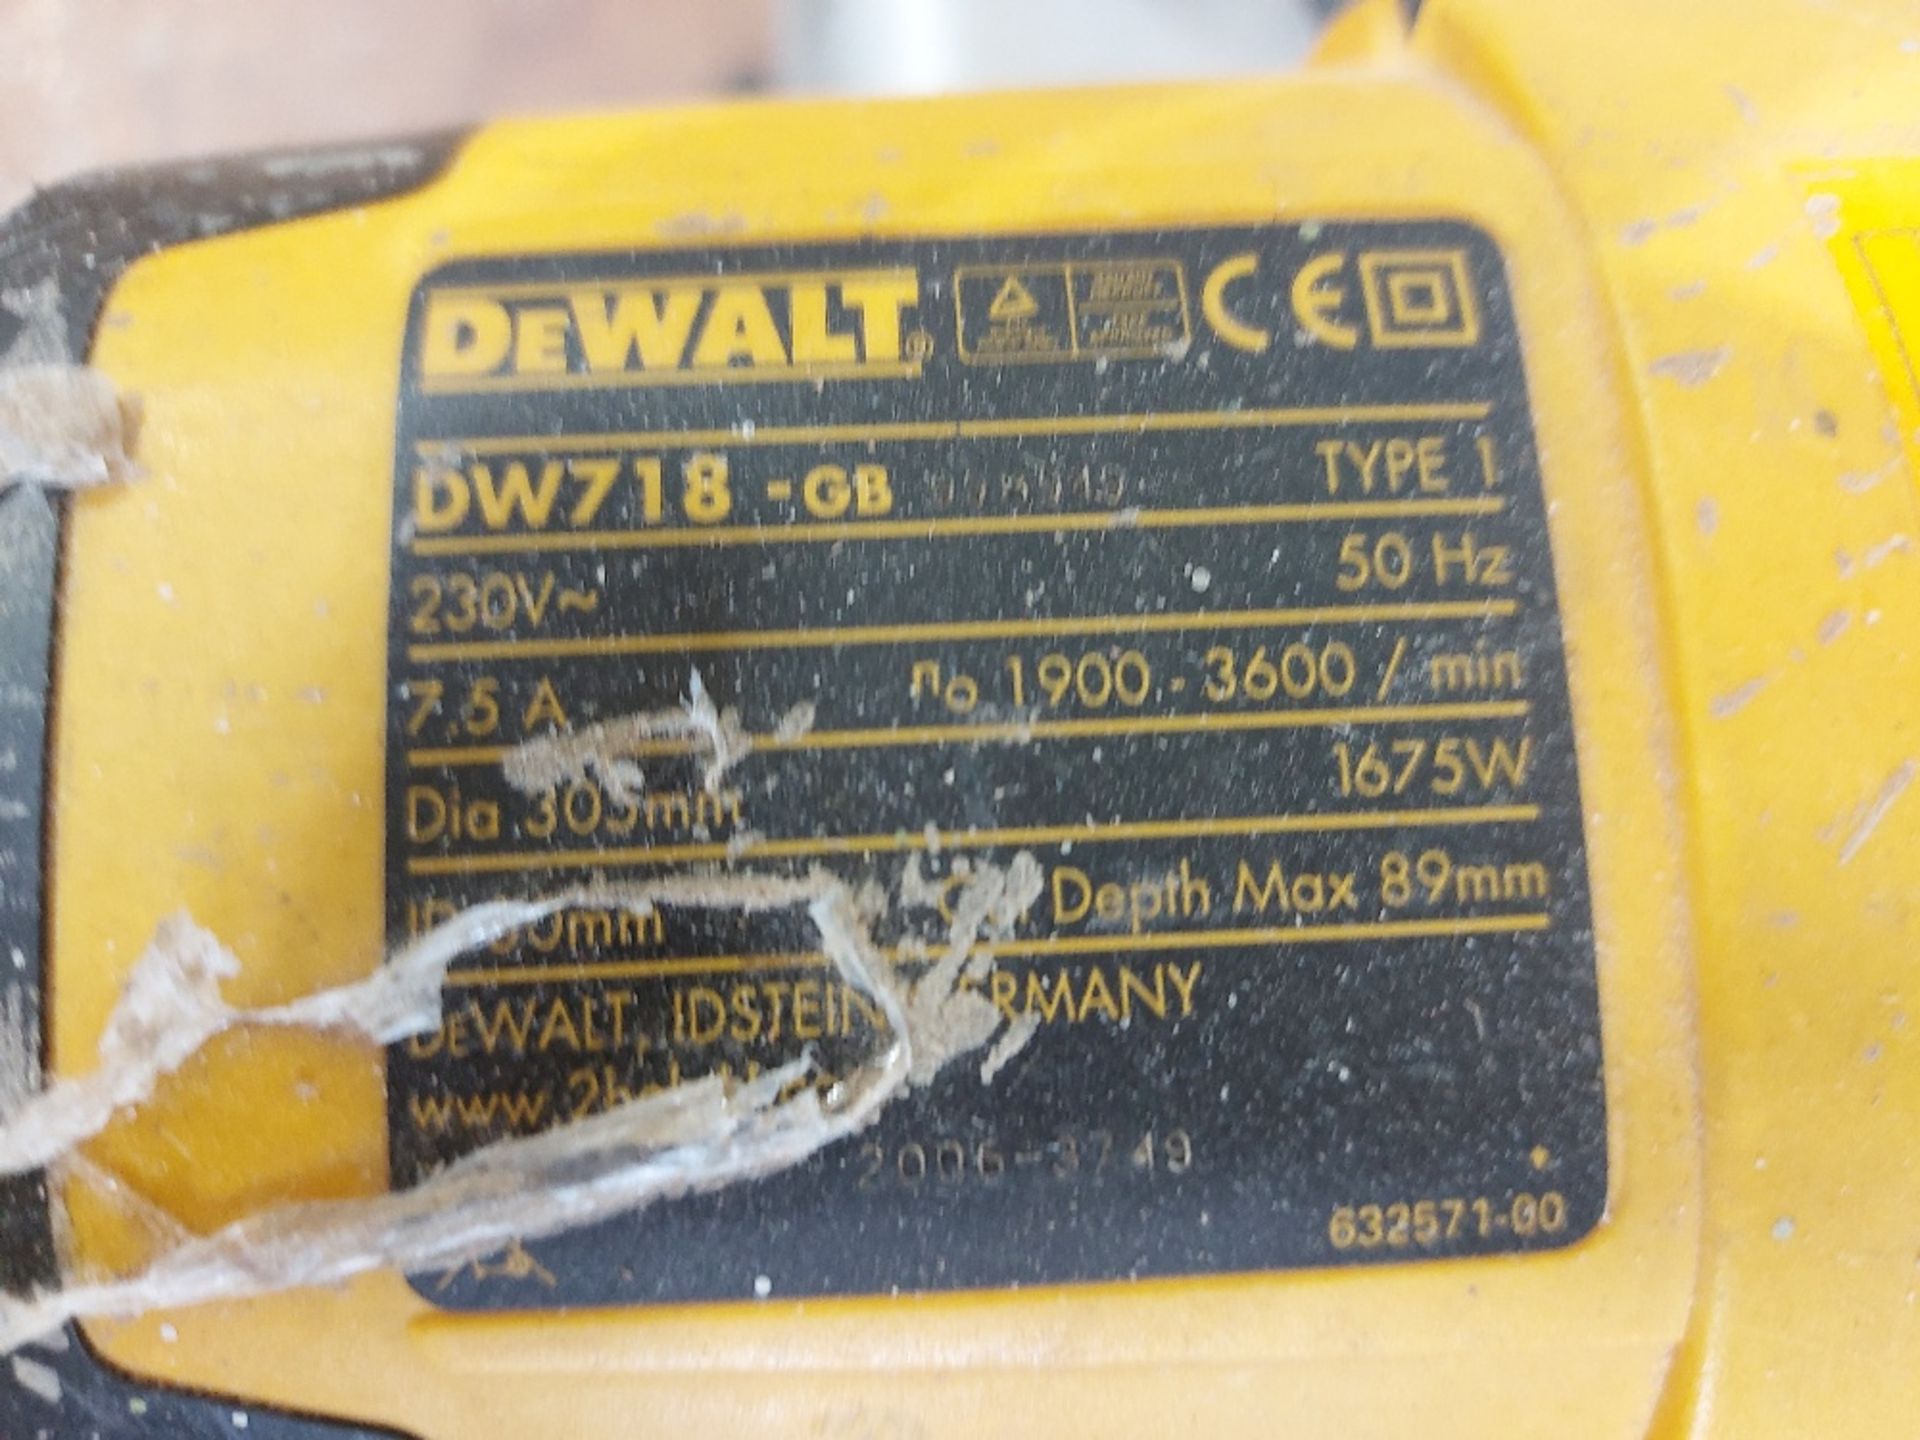 DeWalt DW718 Sliding Compound Mitre Saw - Image 3 of 3